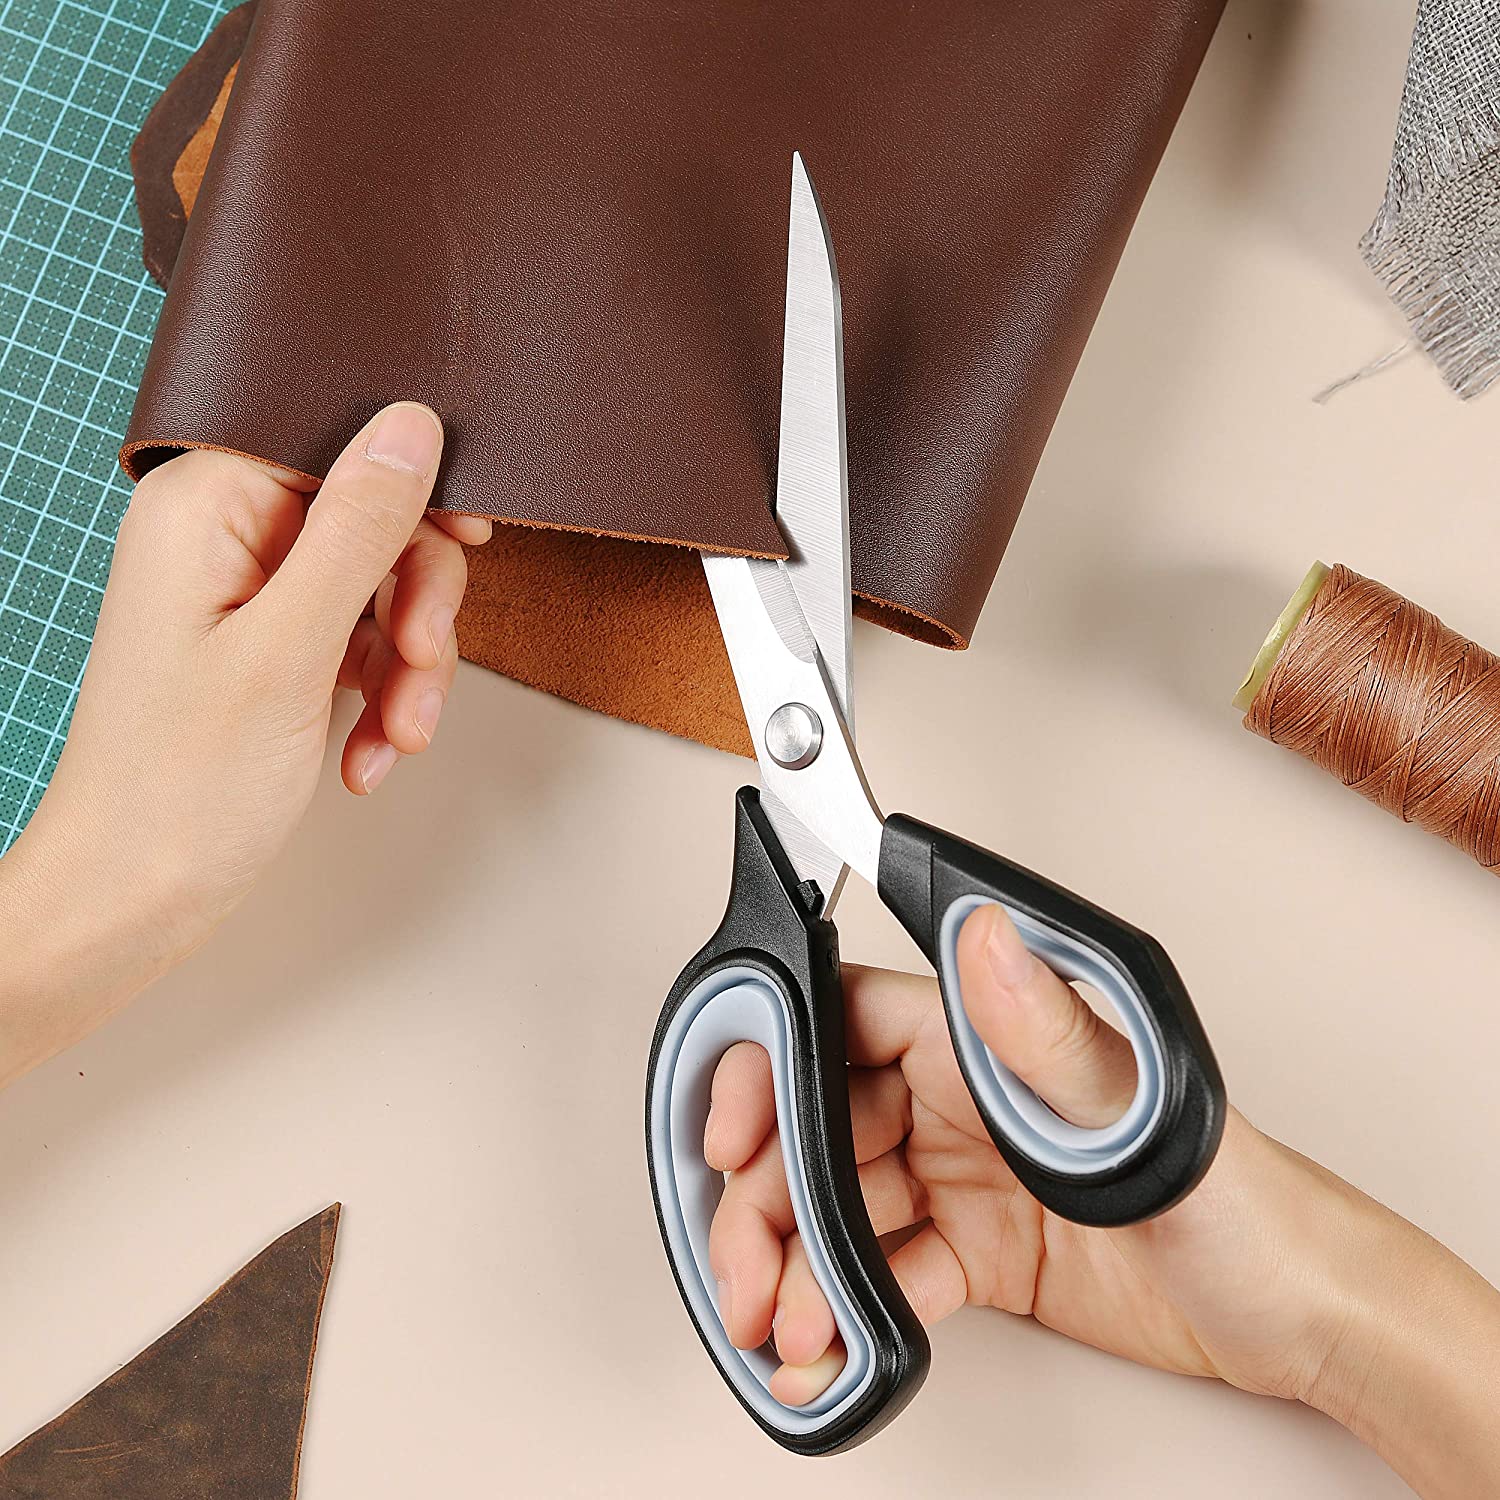 Fabric Scissors Professional (9-inch), Premium Scissors for Fabric Cutting  with Bonus Measuring Tape - Made of High Density Carbon Steel Shears,  Sewing Scissors for Fabric, Leather, Thin Metal, etc. 9 inch